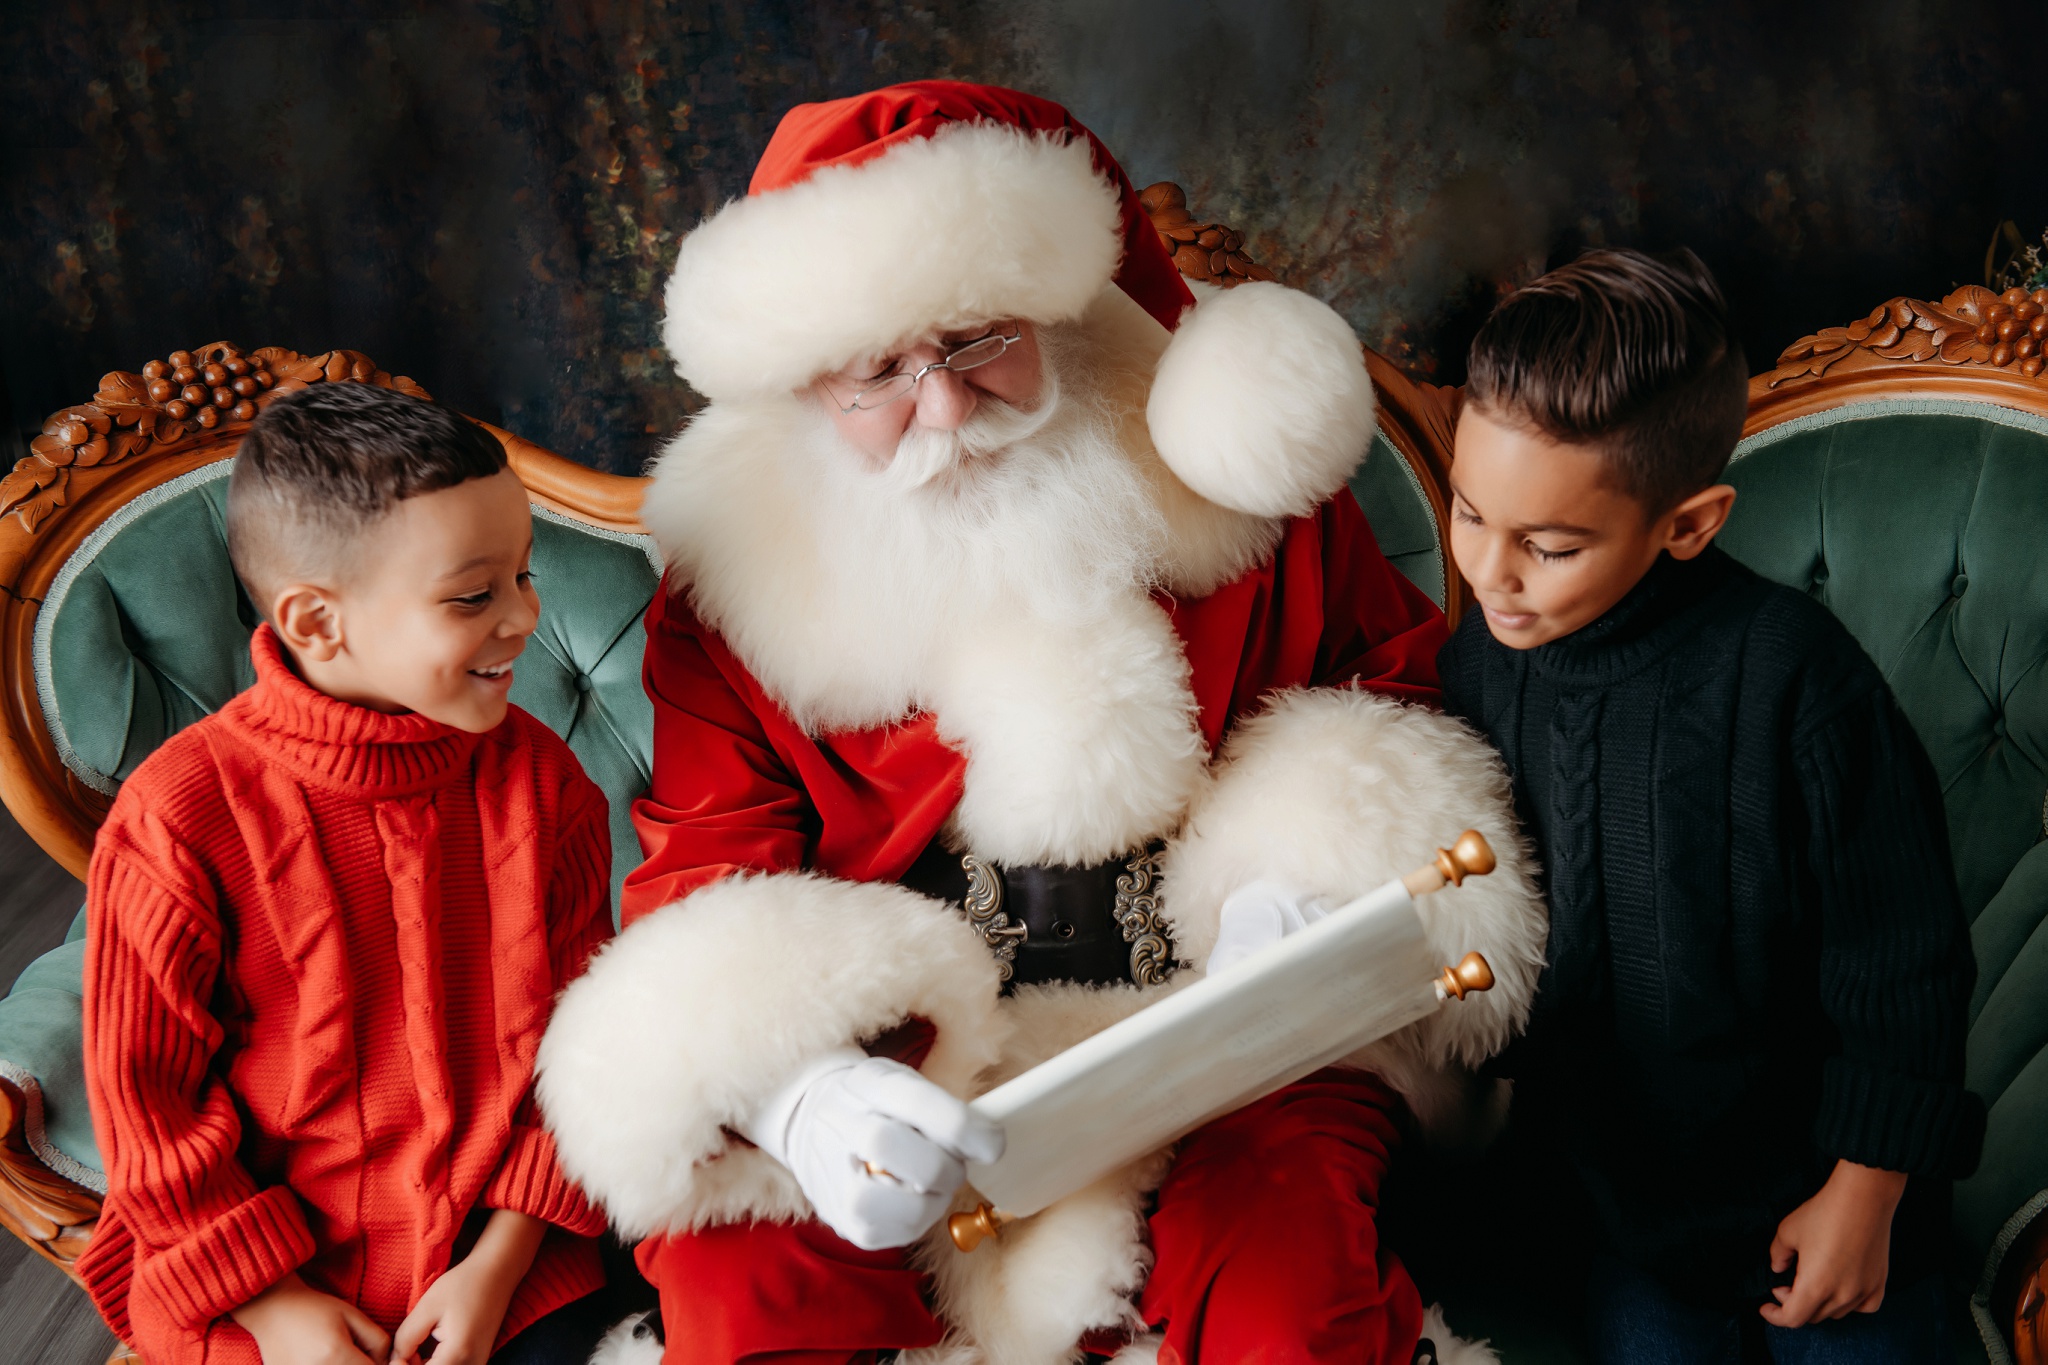 checking Santa's list family Christmas activities